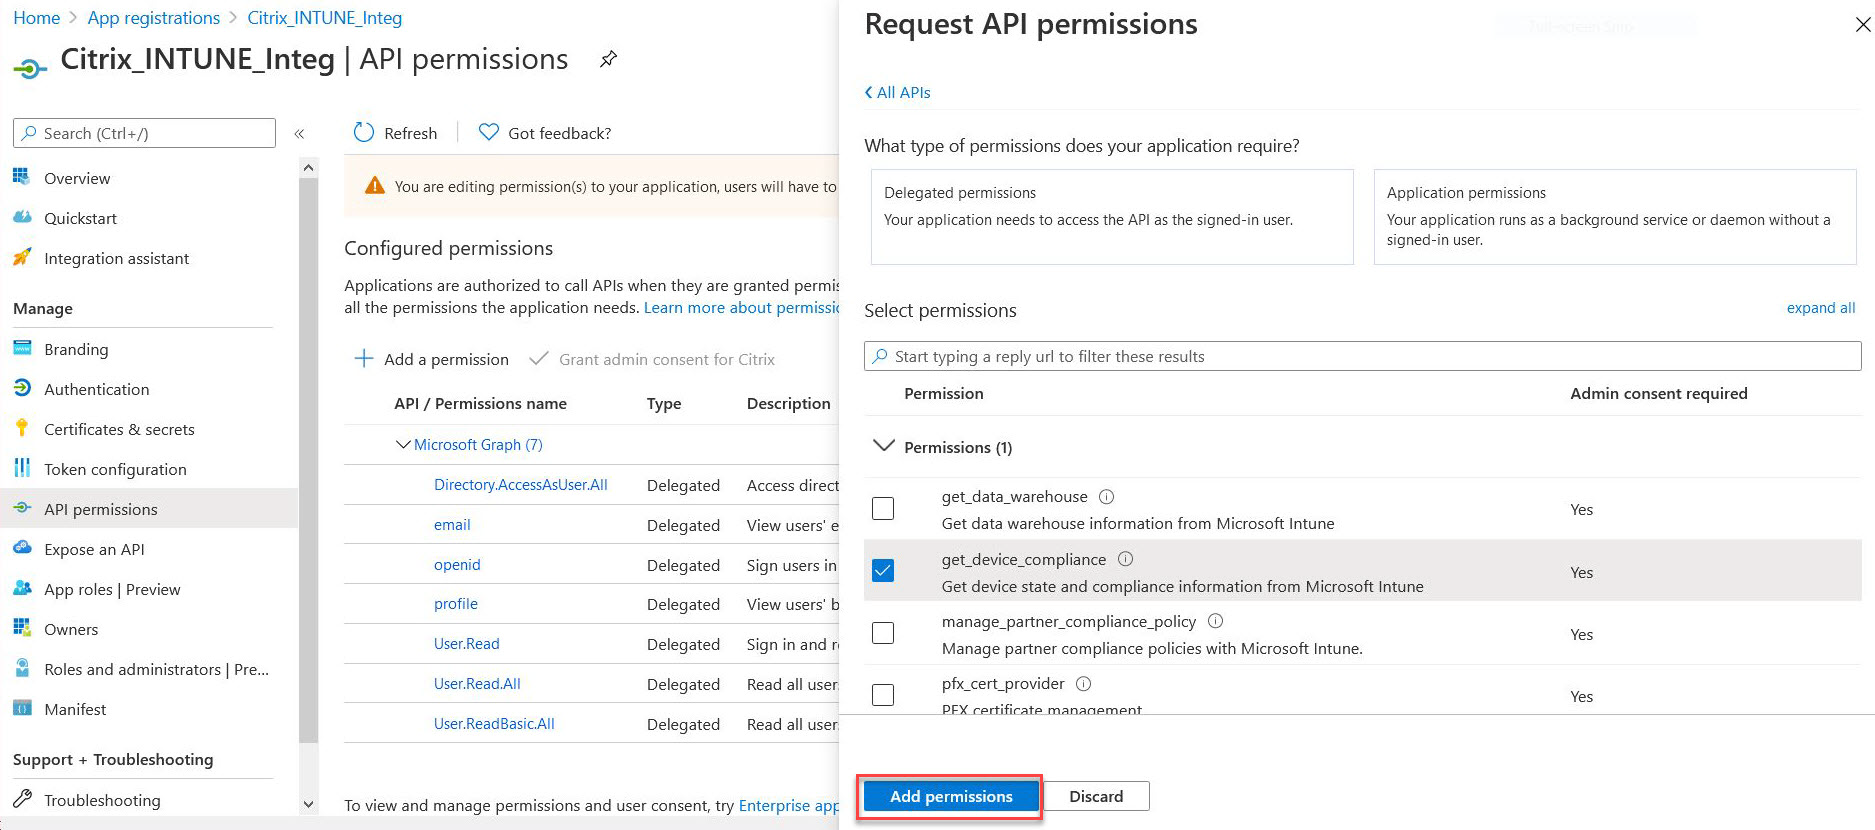 API permissions get device